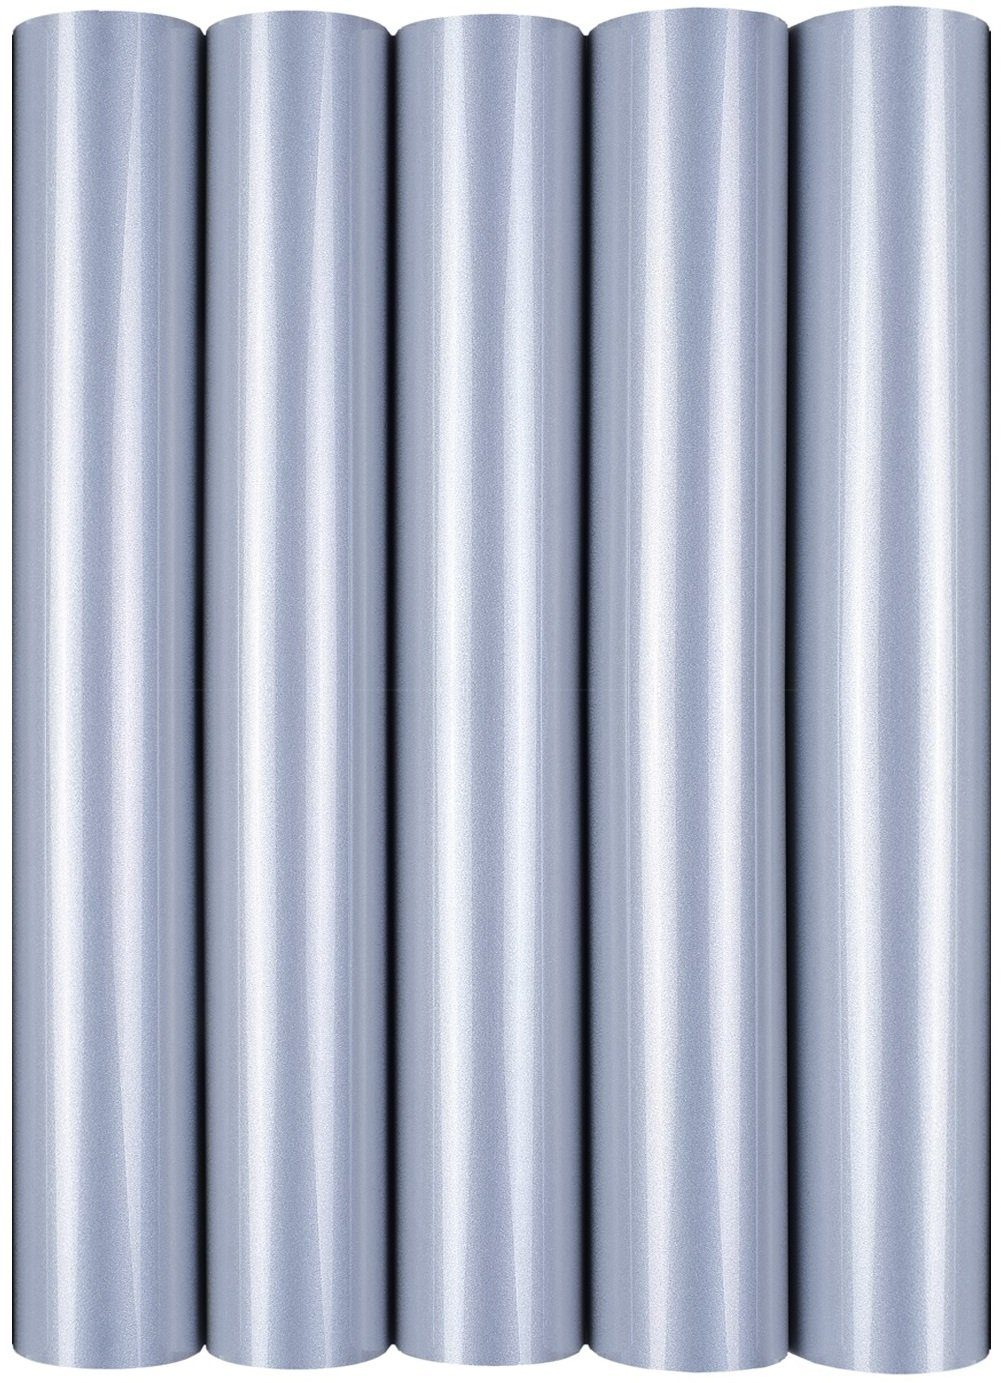 Hilltop Transparentpapier Reflektierende Transferfolie, Textilfolie, mehrfarbig, 30x20 cm Reflective Silver